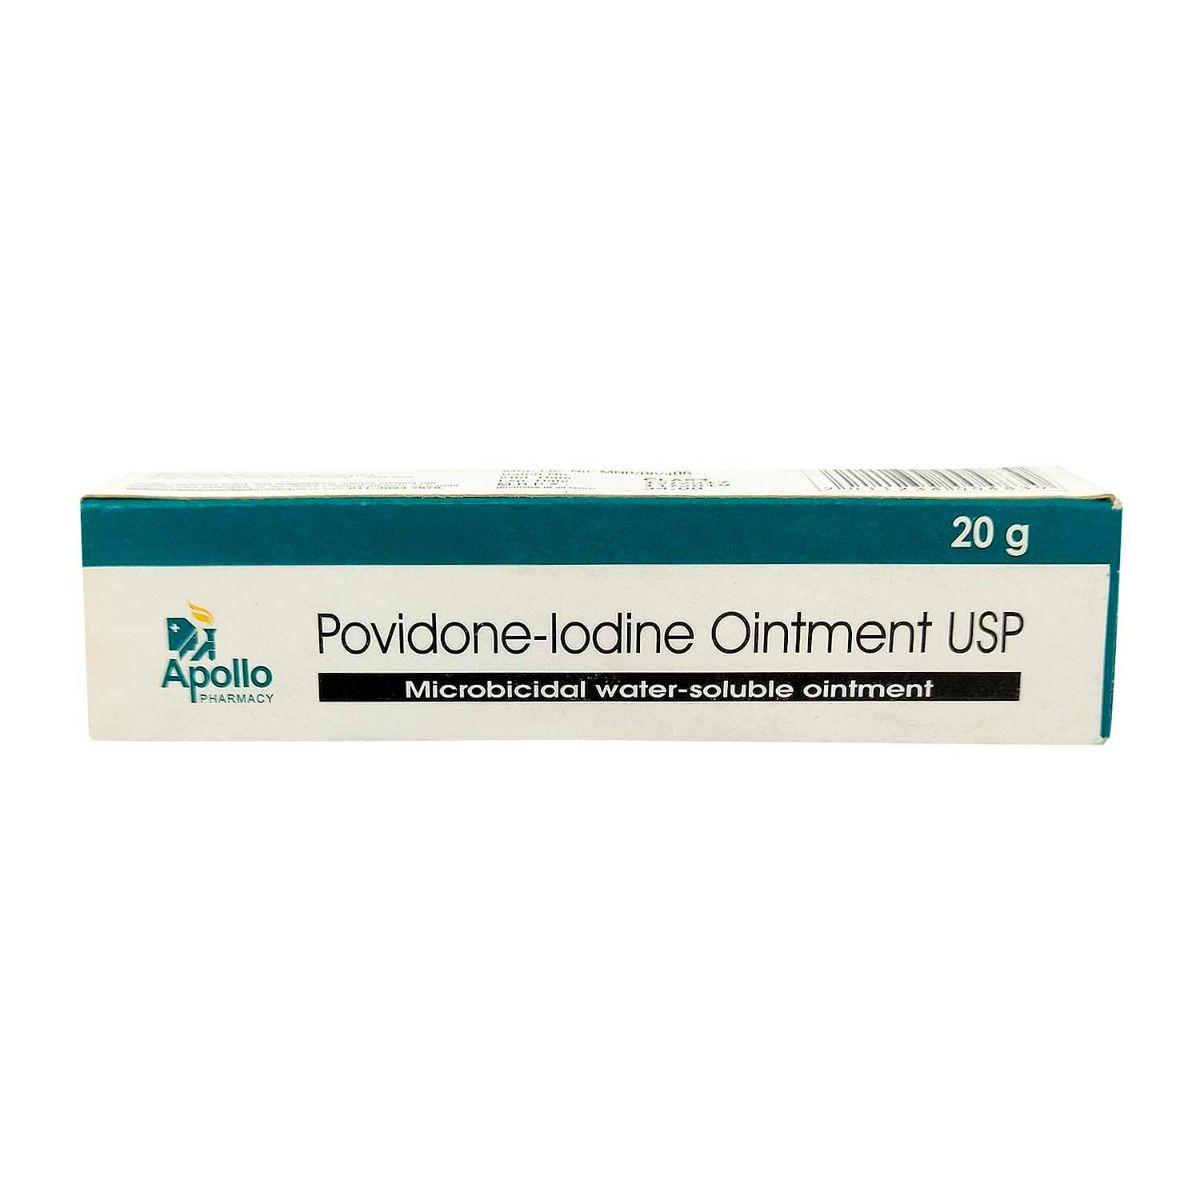 Buy Apollo Pharmacy Povidone-Iodine Ointment USP, 20 gm Online